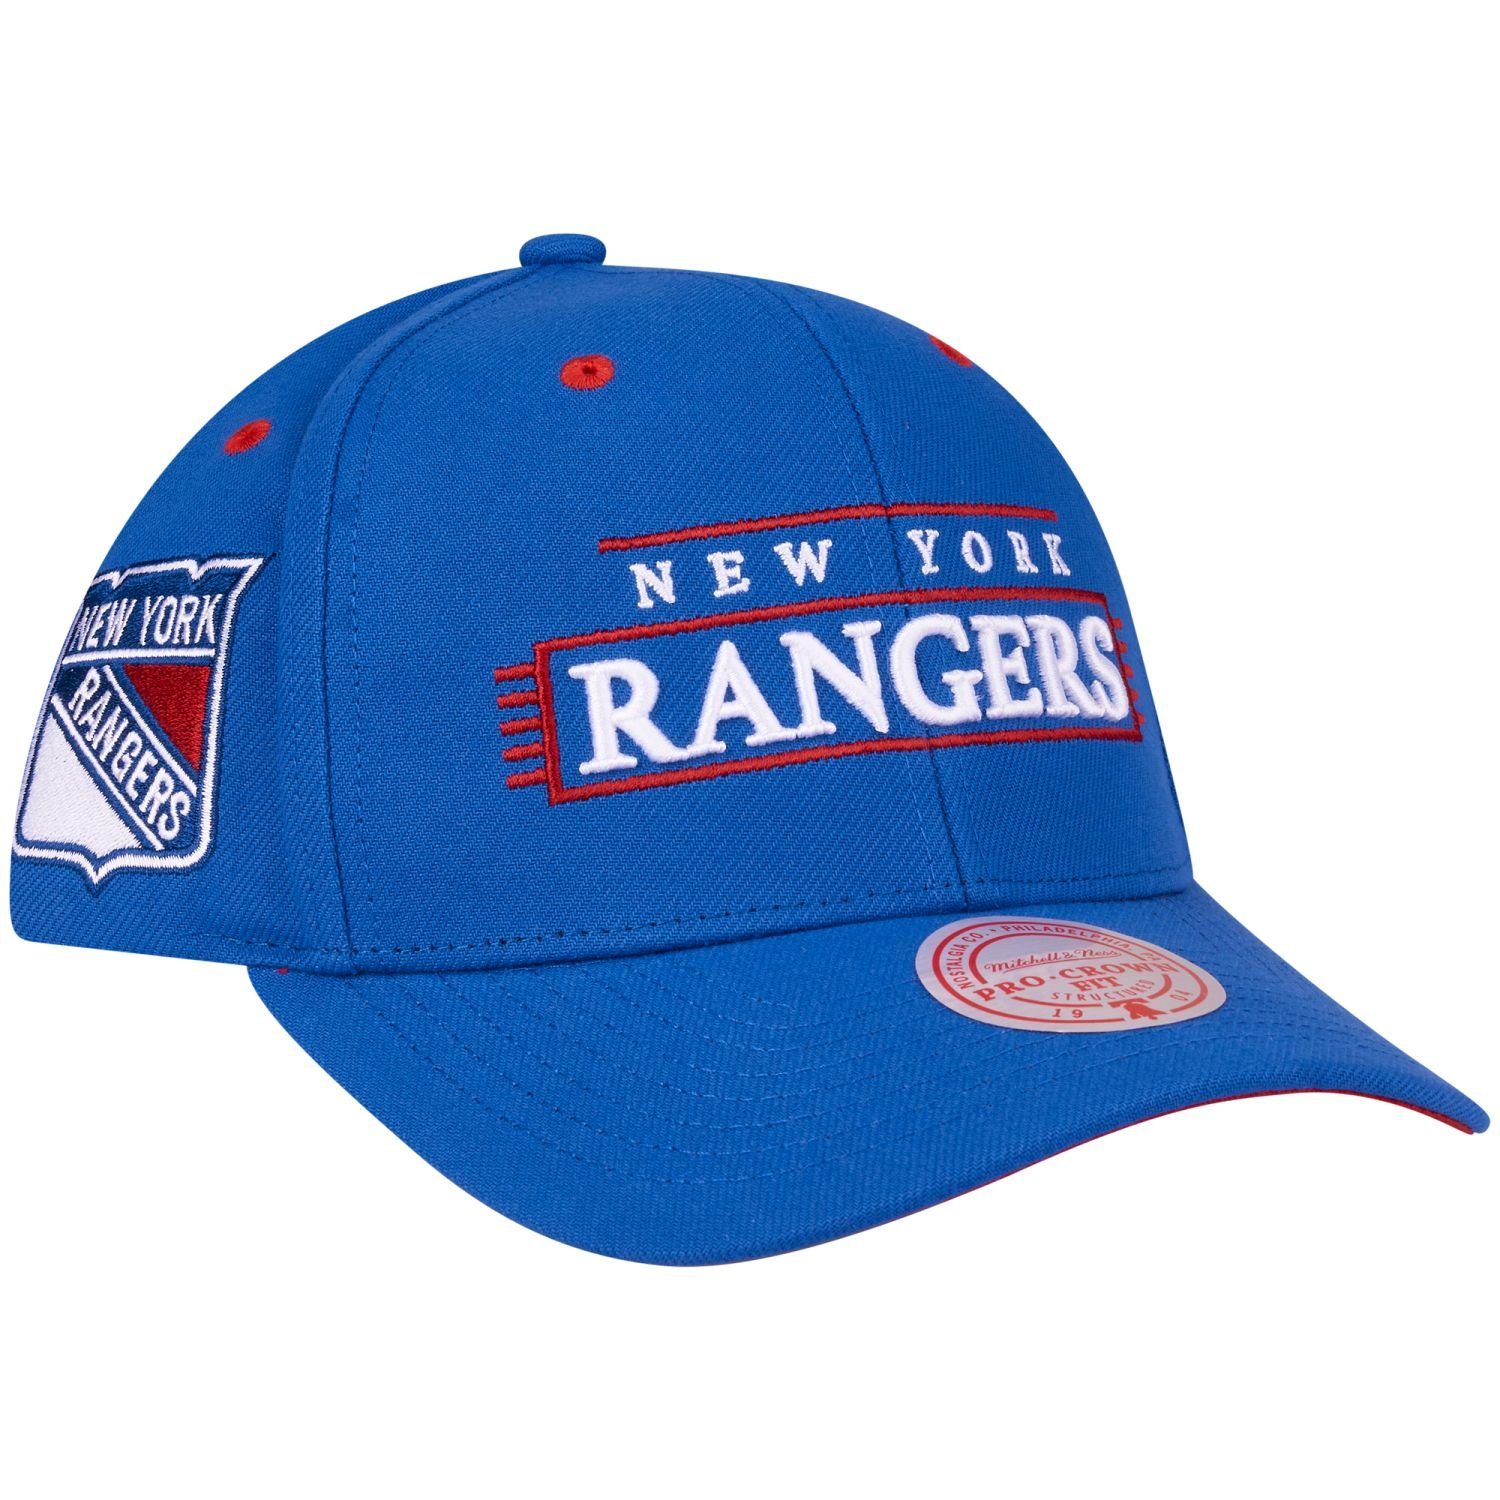 Mitchell PRO LOFI Ness New York Cap & Rangers Snapback